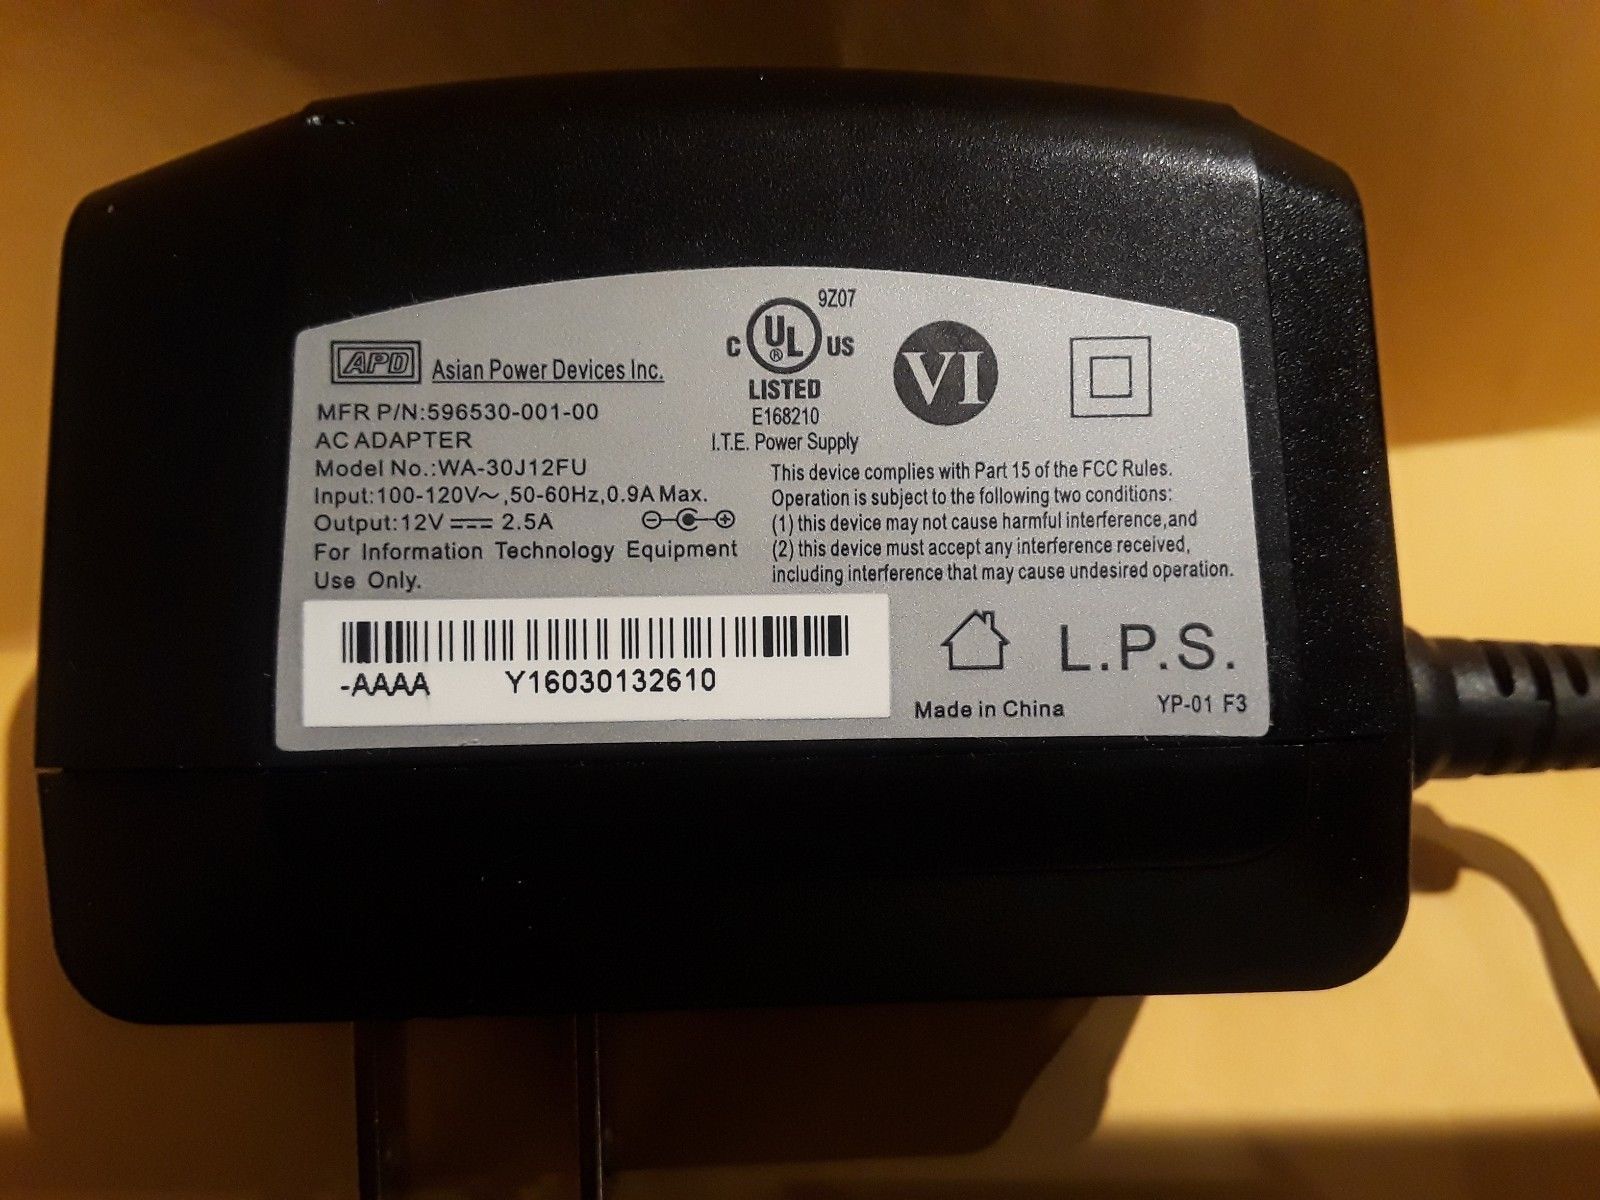 NEW 12V 2.5A APD WA-30J12FU 596530-001-00 AC Adapter for Netgear AC1750 AC1600 AC130 power supply